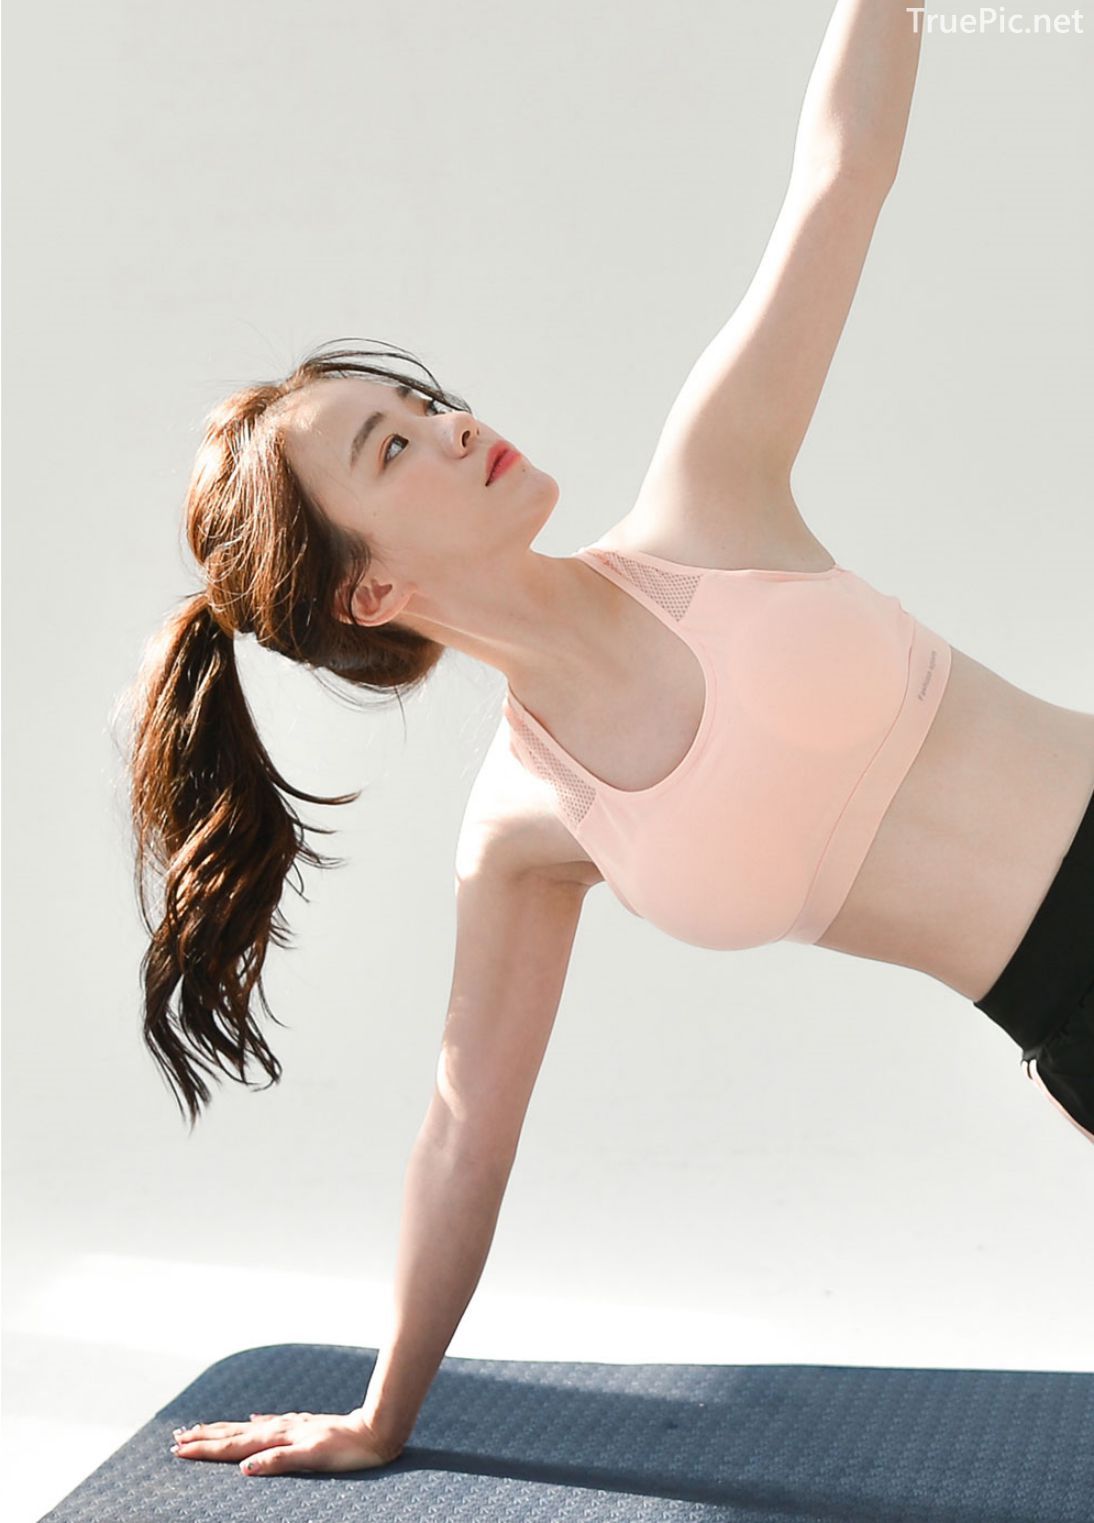 Korean Lingerie Queen - Haneul - Fitness Set Collection - TruePic.net - Picture 33